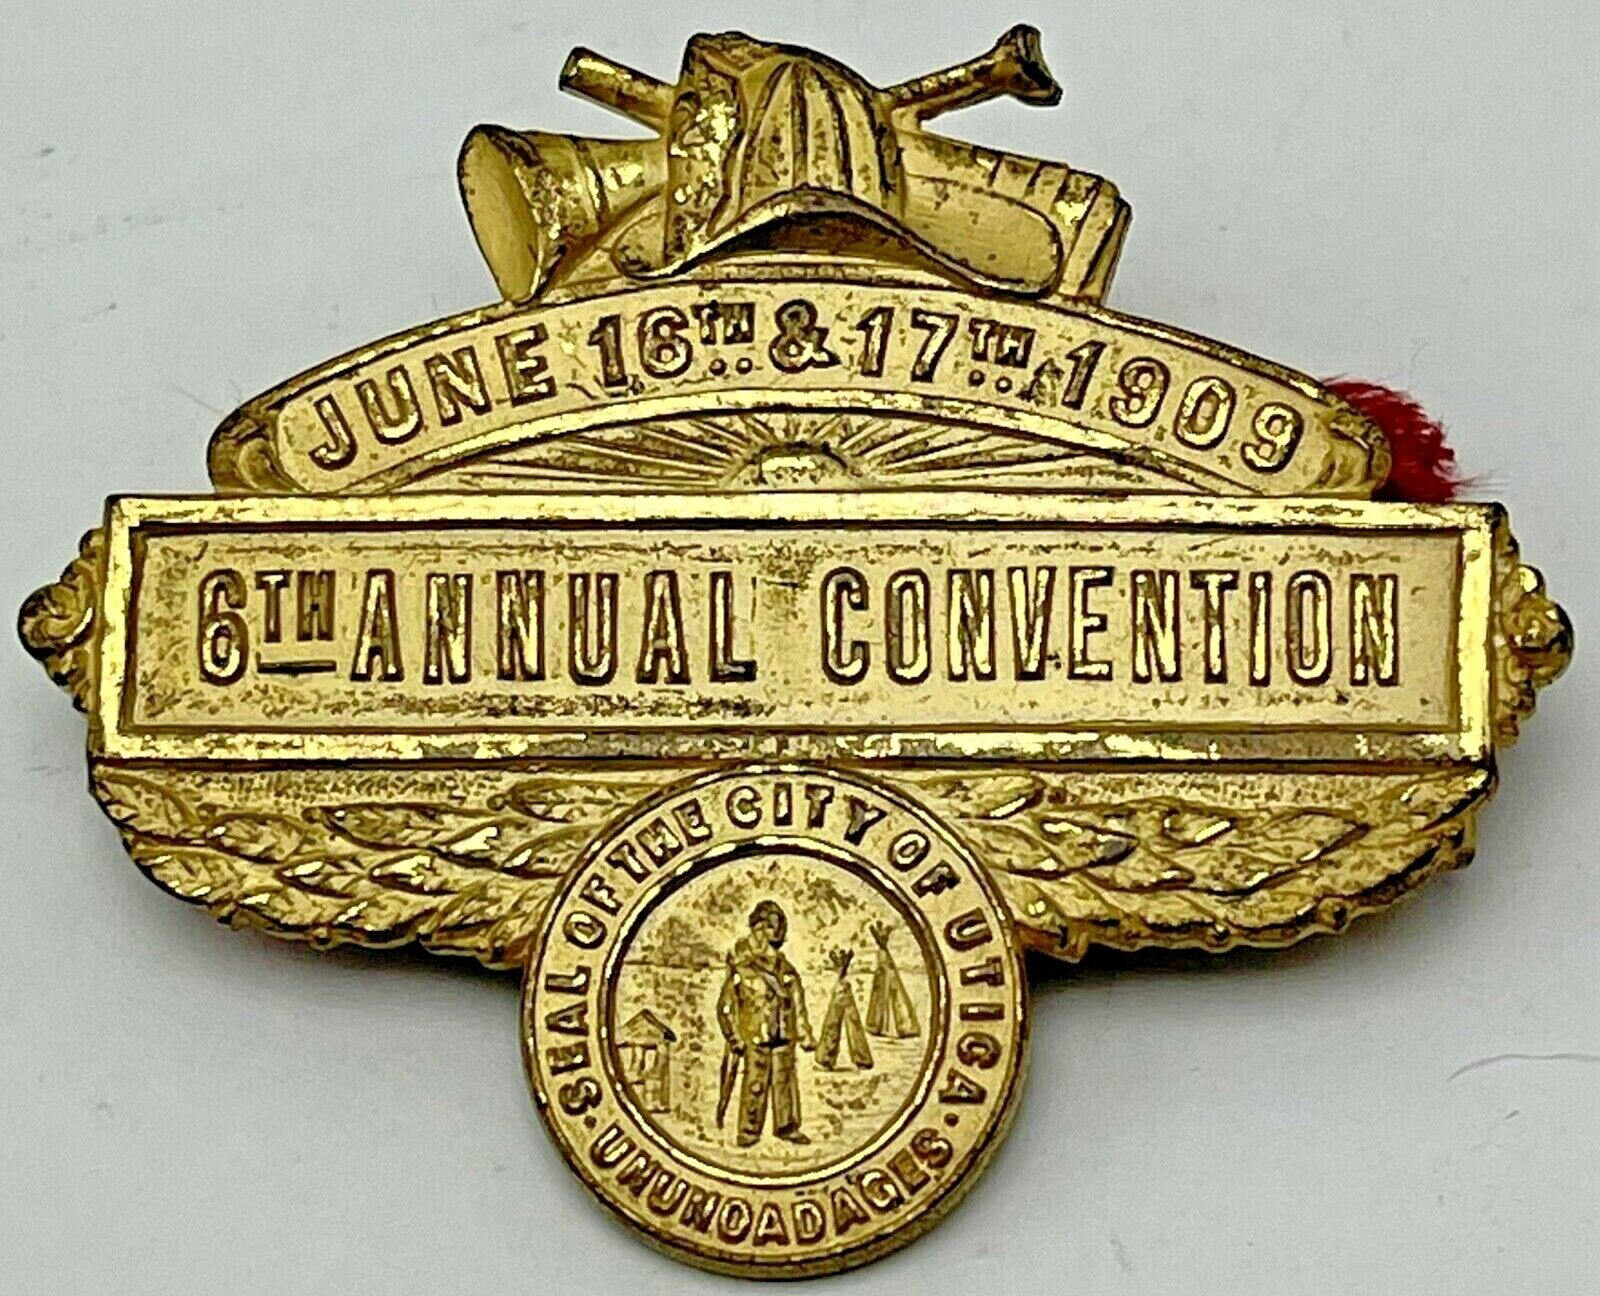 1909 Antique Utica New York Firemen Convention Badge Pin 6th Annual June 16 17